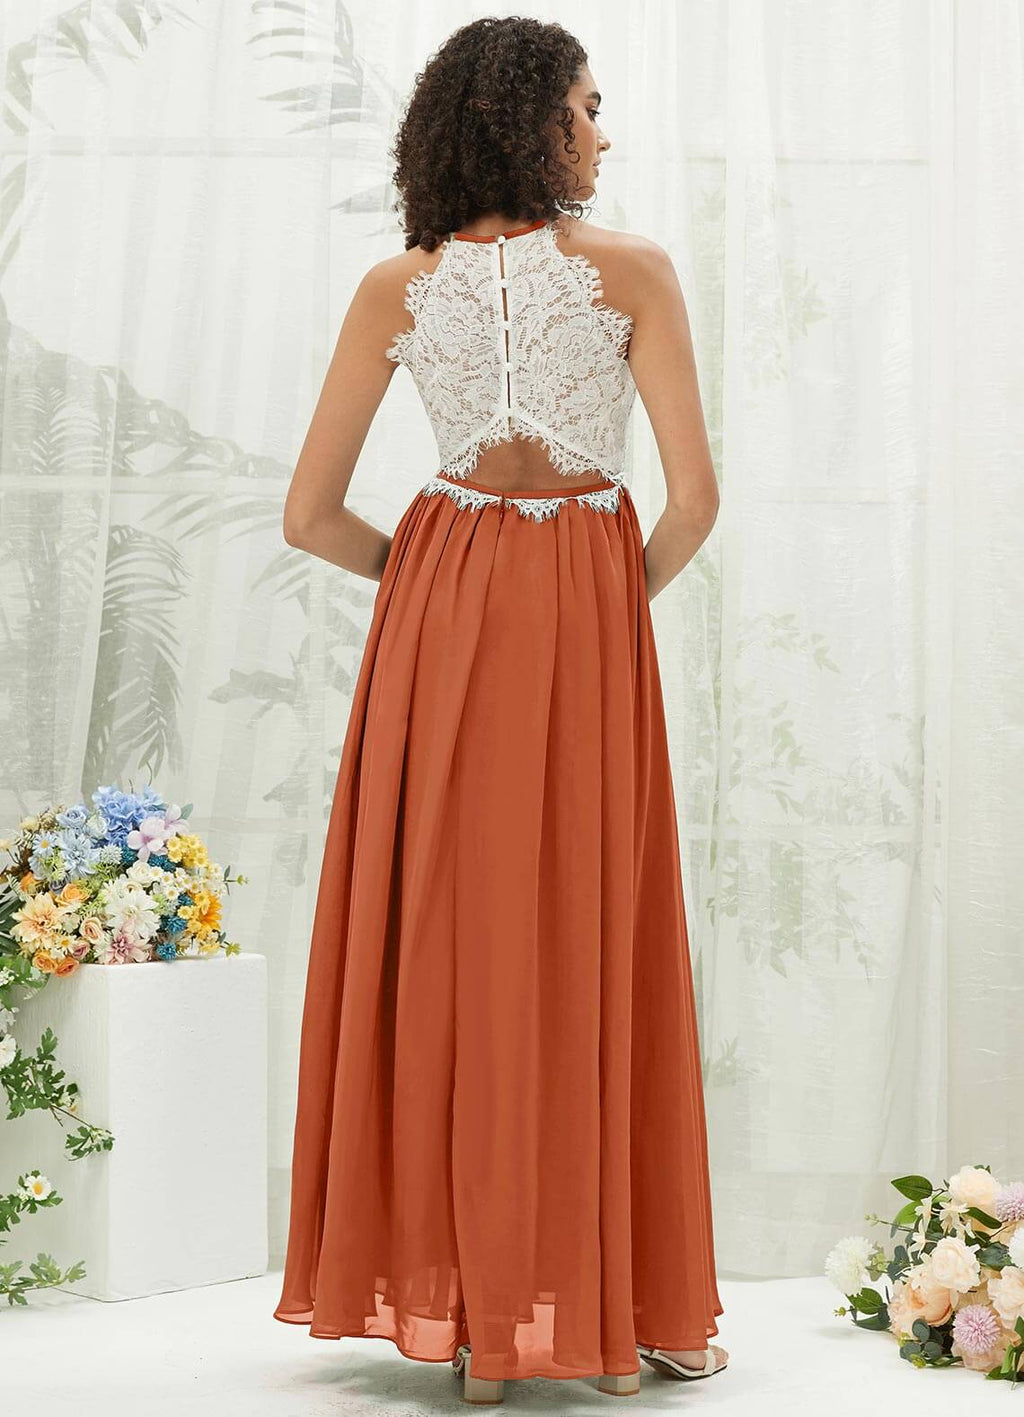 NZ Bridal Burnt Orange Lace Chiffon Flowy bridesmaid dresses TC0426 Heidi a